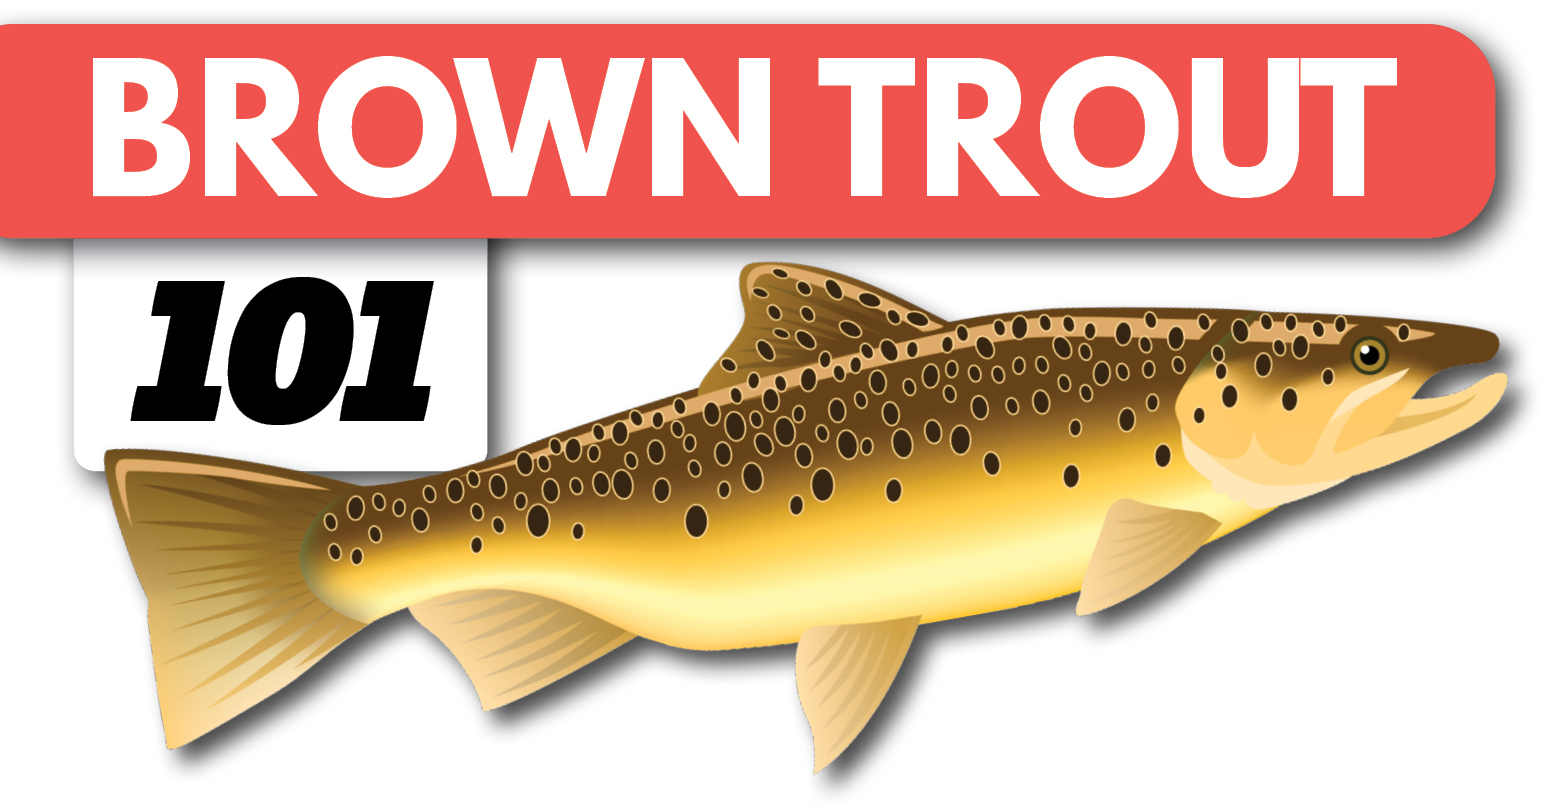 Trout rig  Trout fishing tips, Fishing tips, Fishing rigs